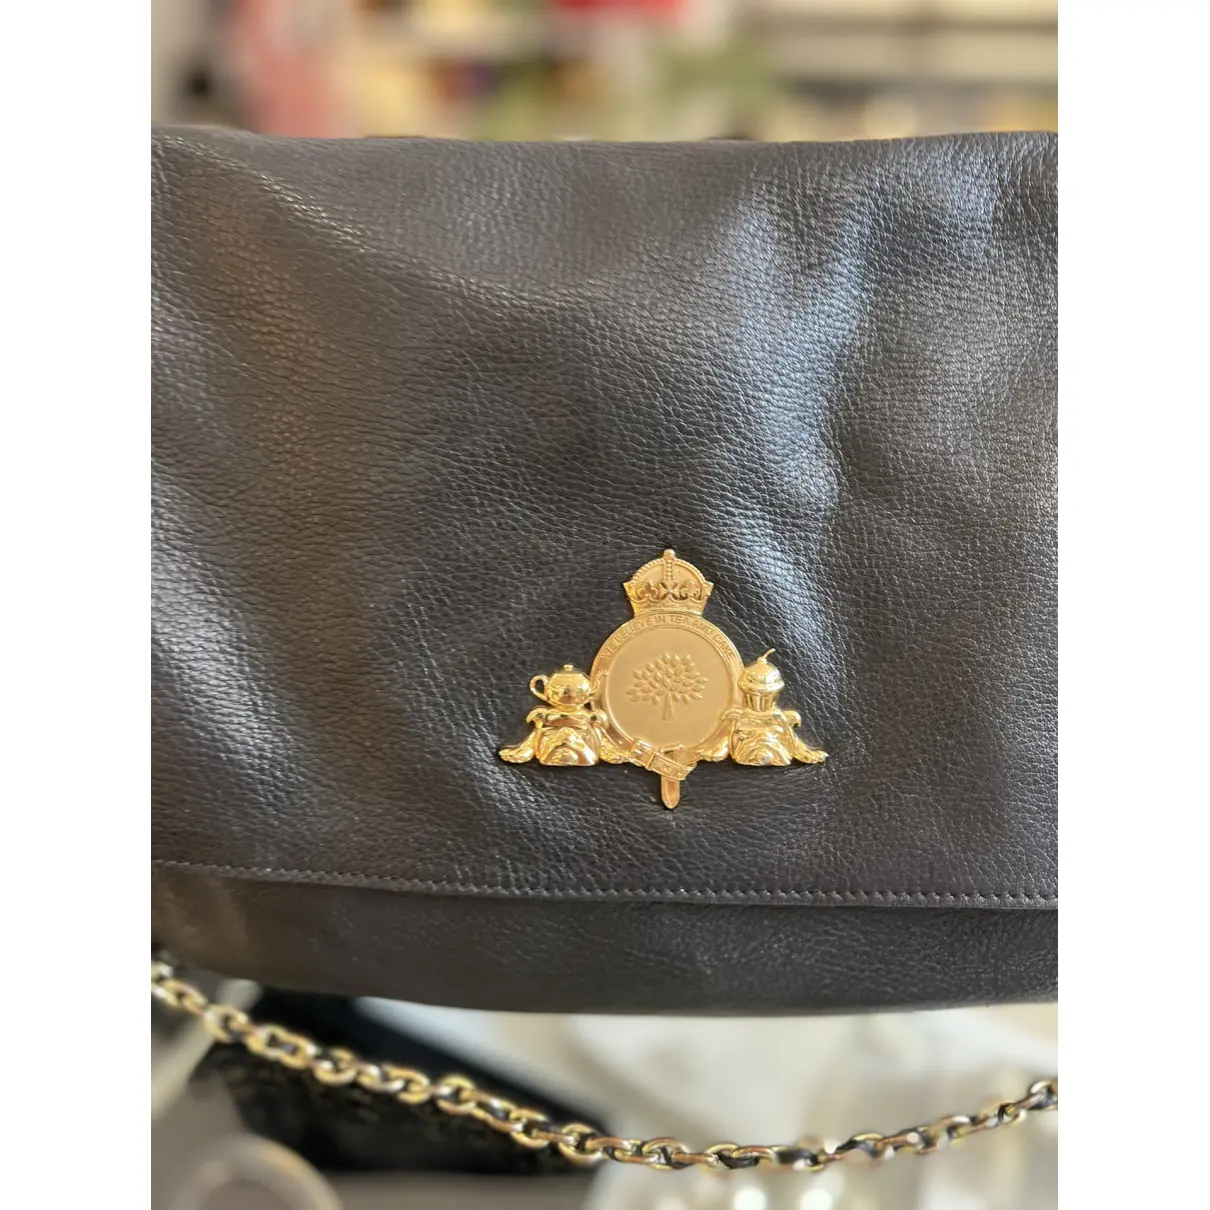 Luxury Mulberry Handbags Women